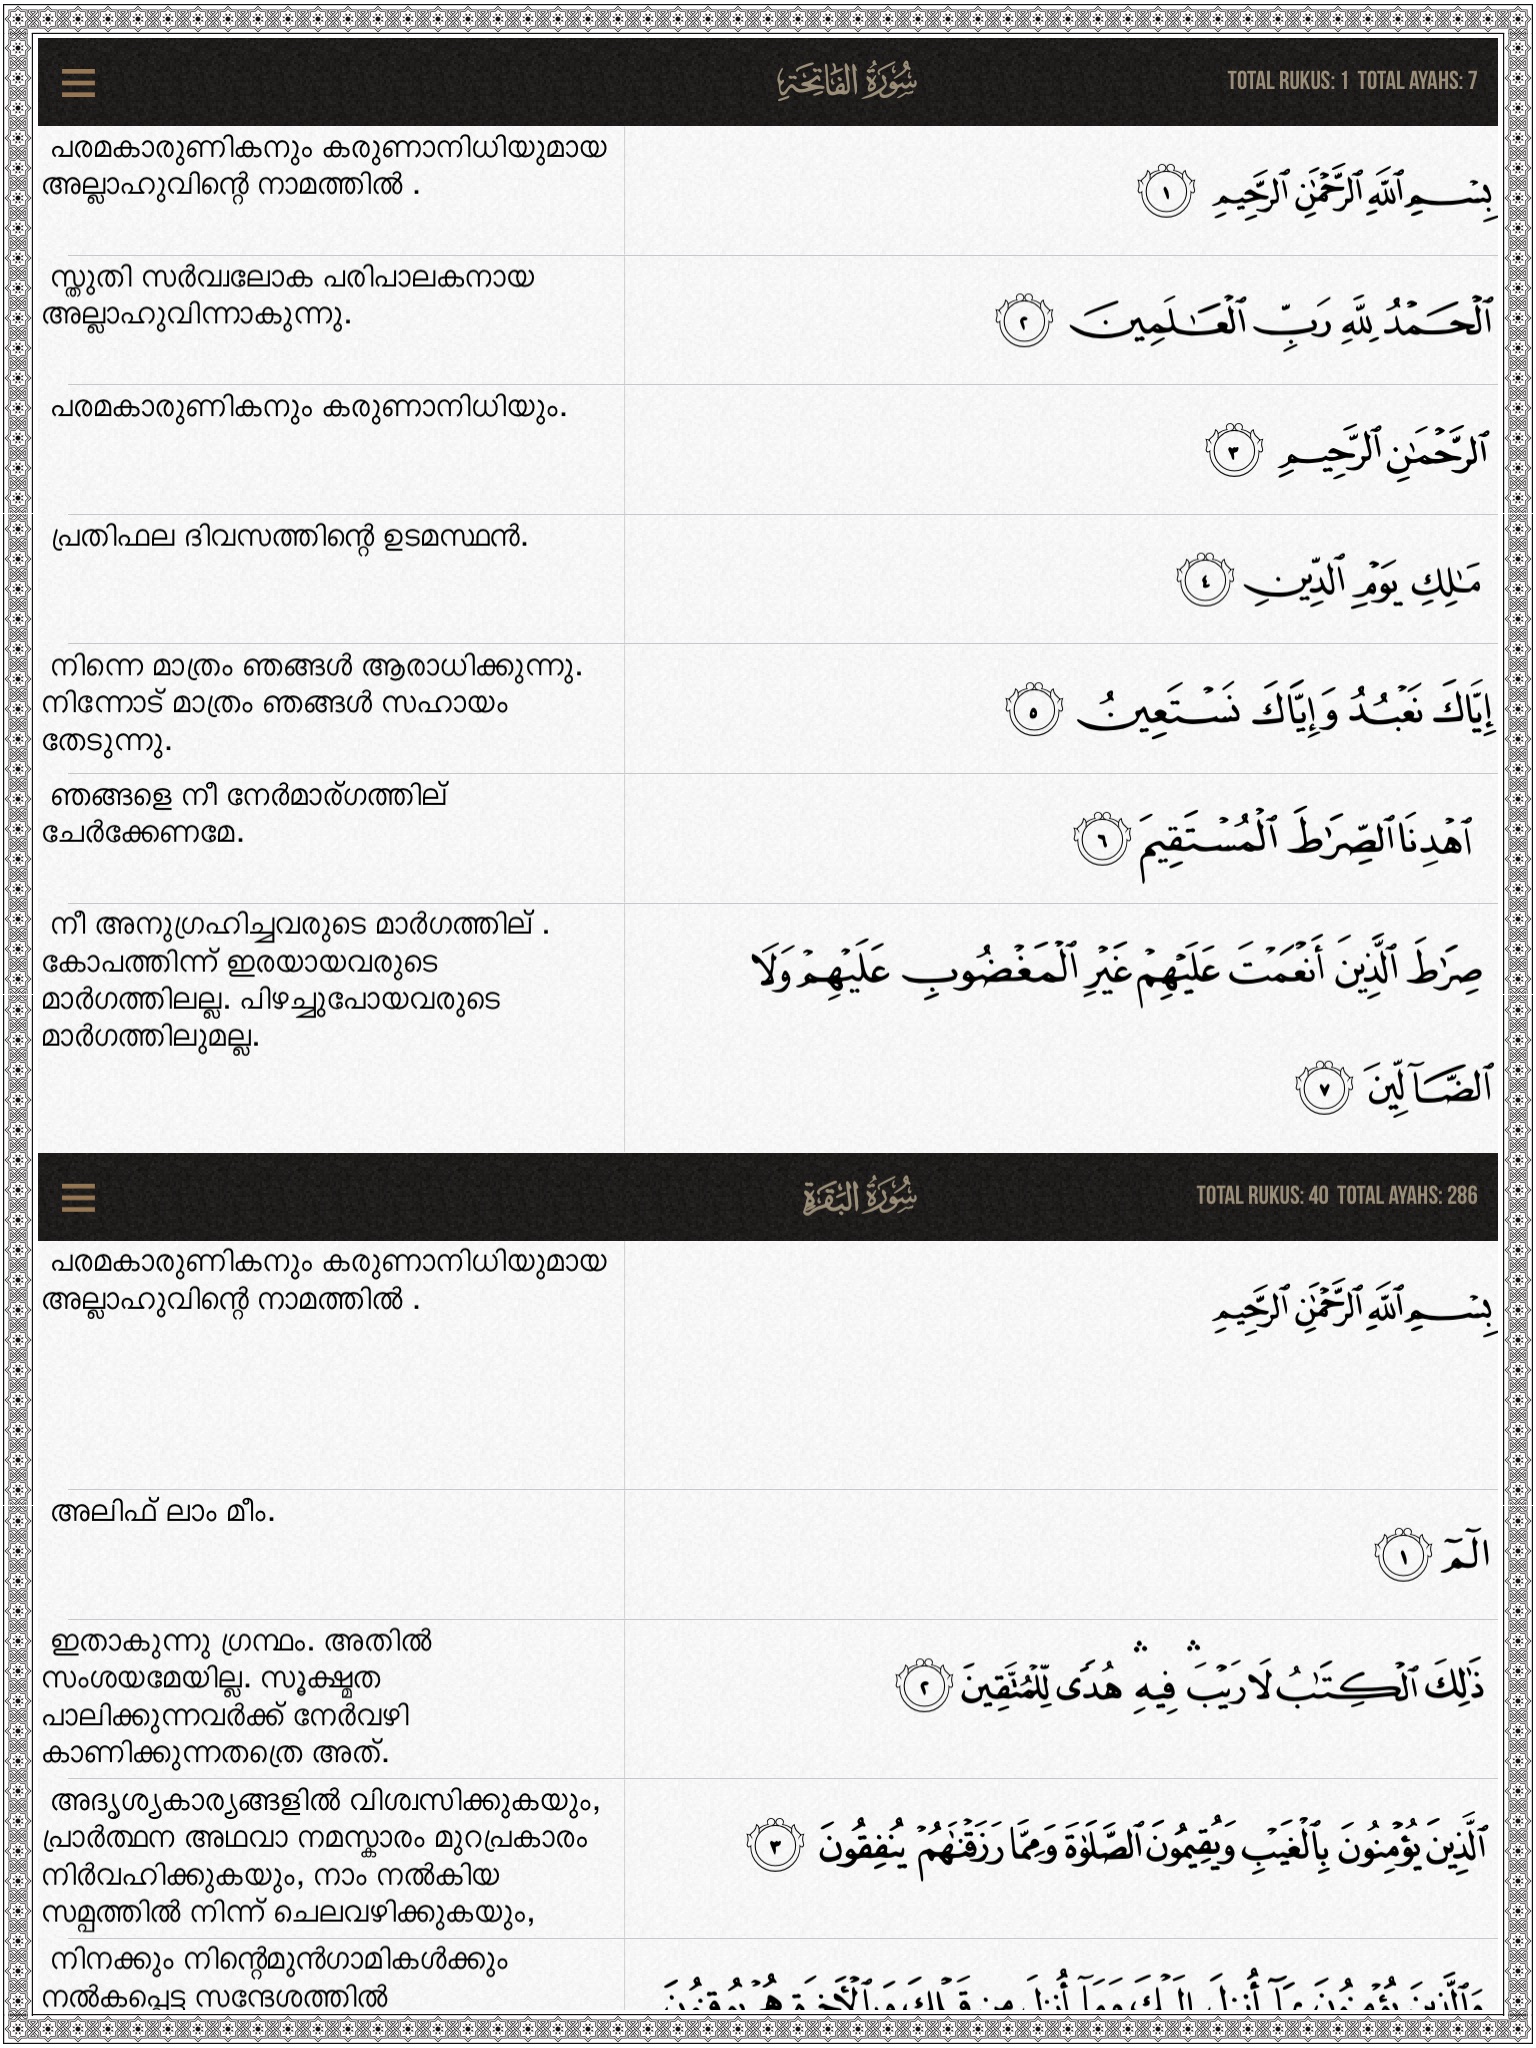 Quran Malayalam screenshot 2